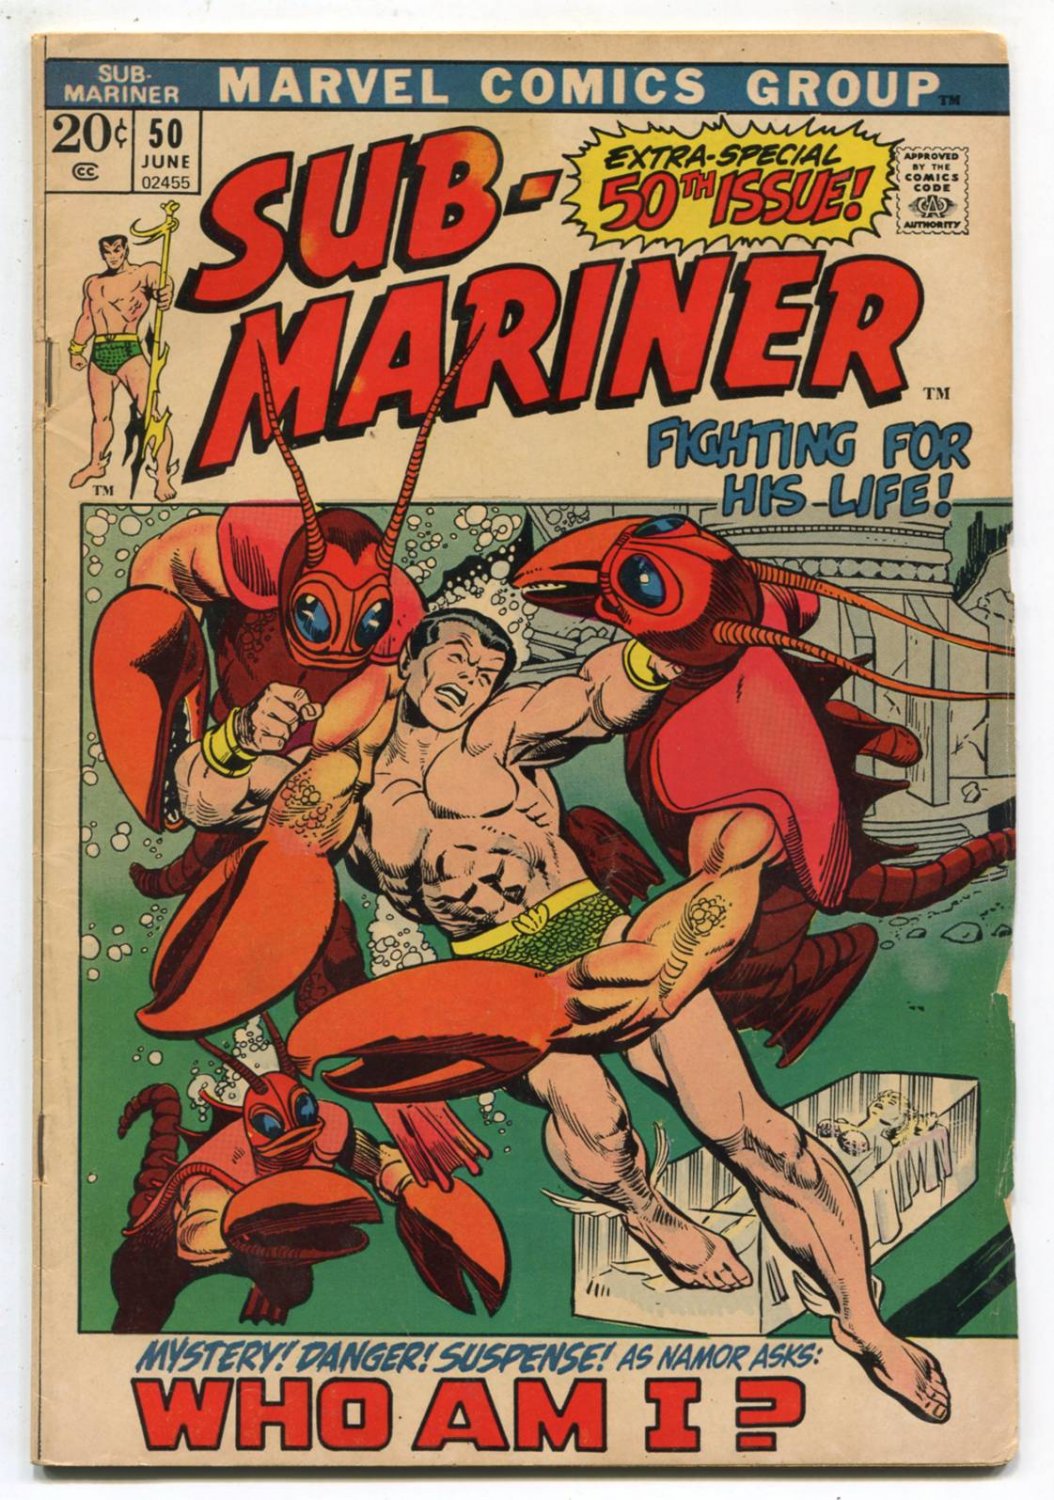 Set of Marvel Bronze Age Comics (1972-73)